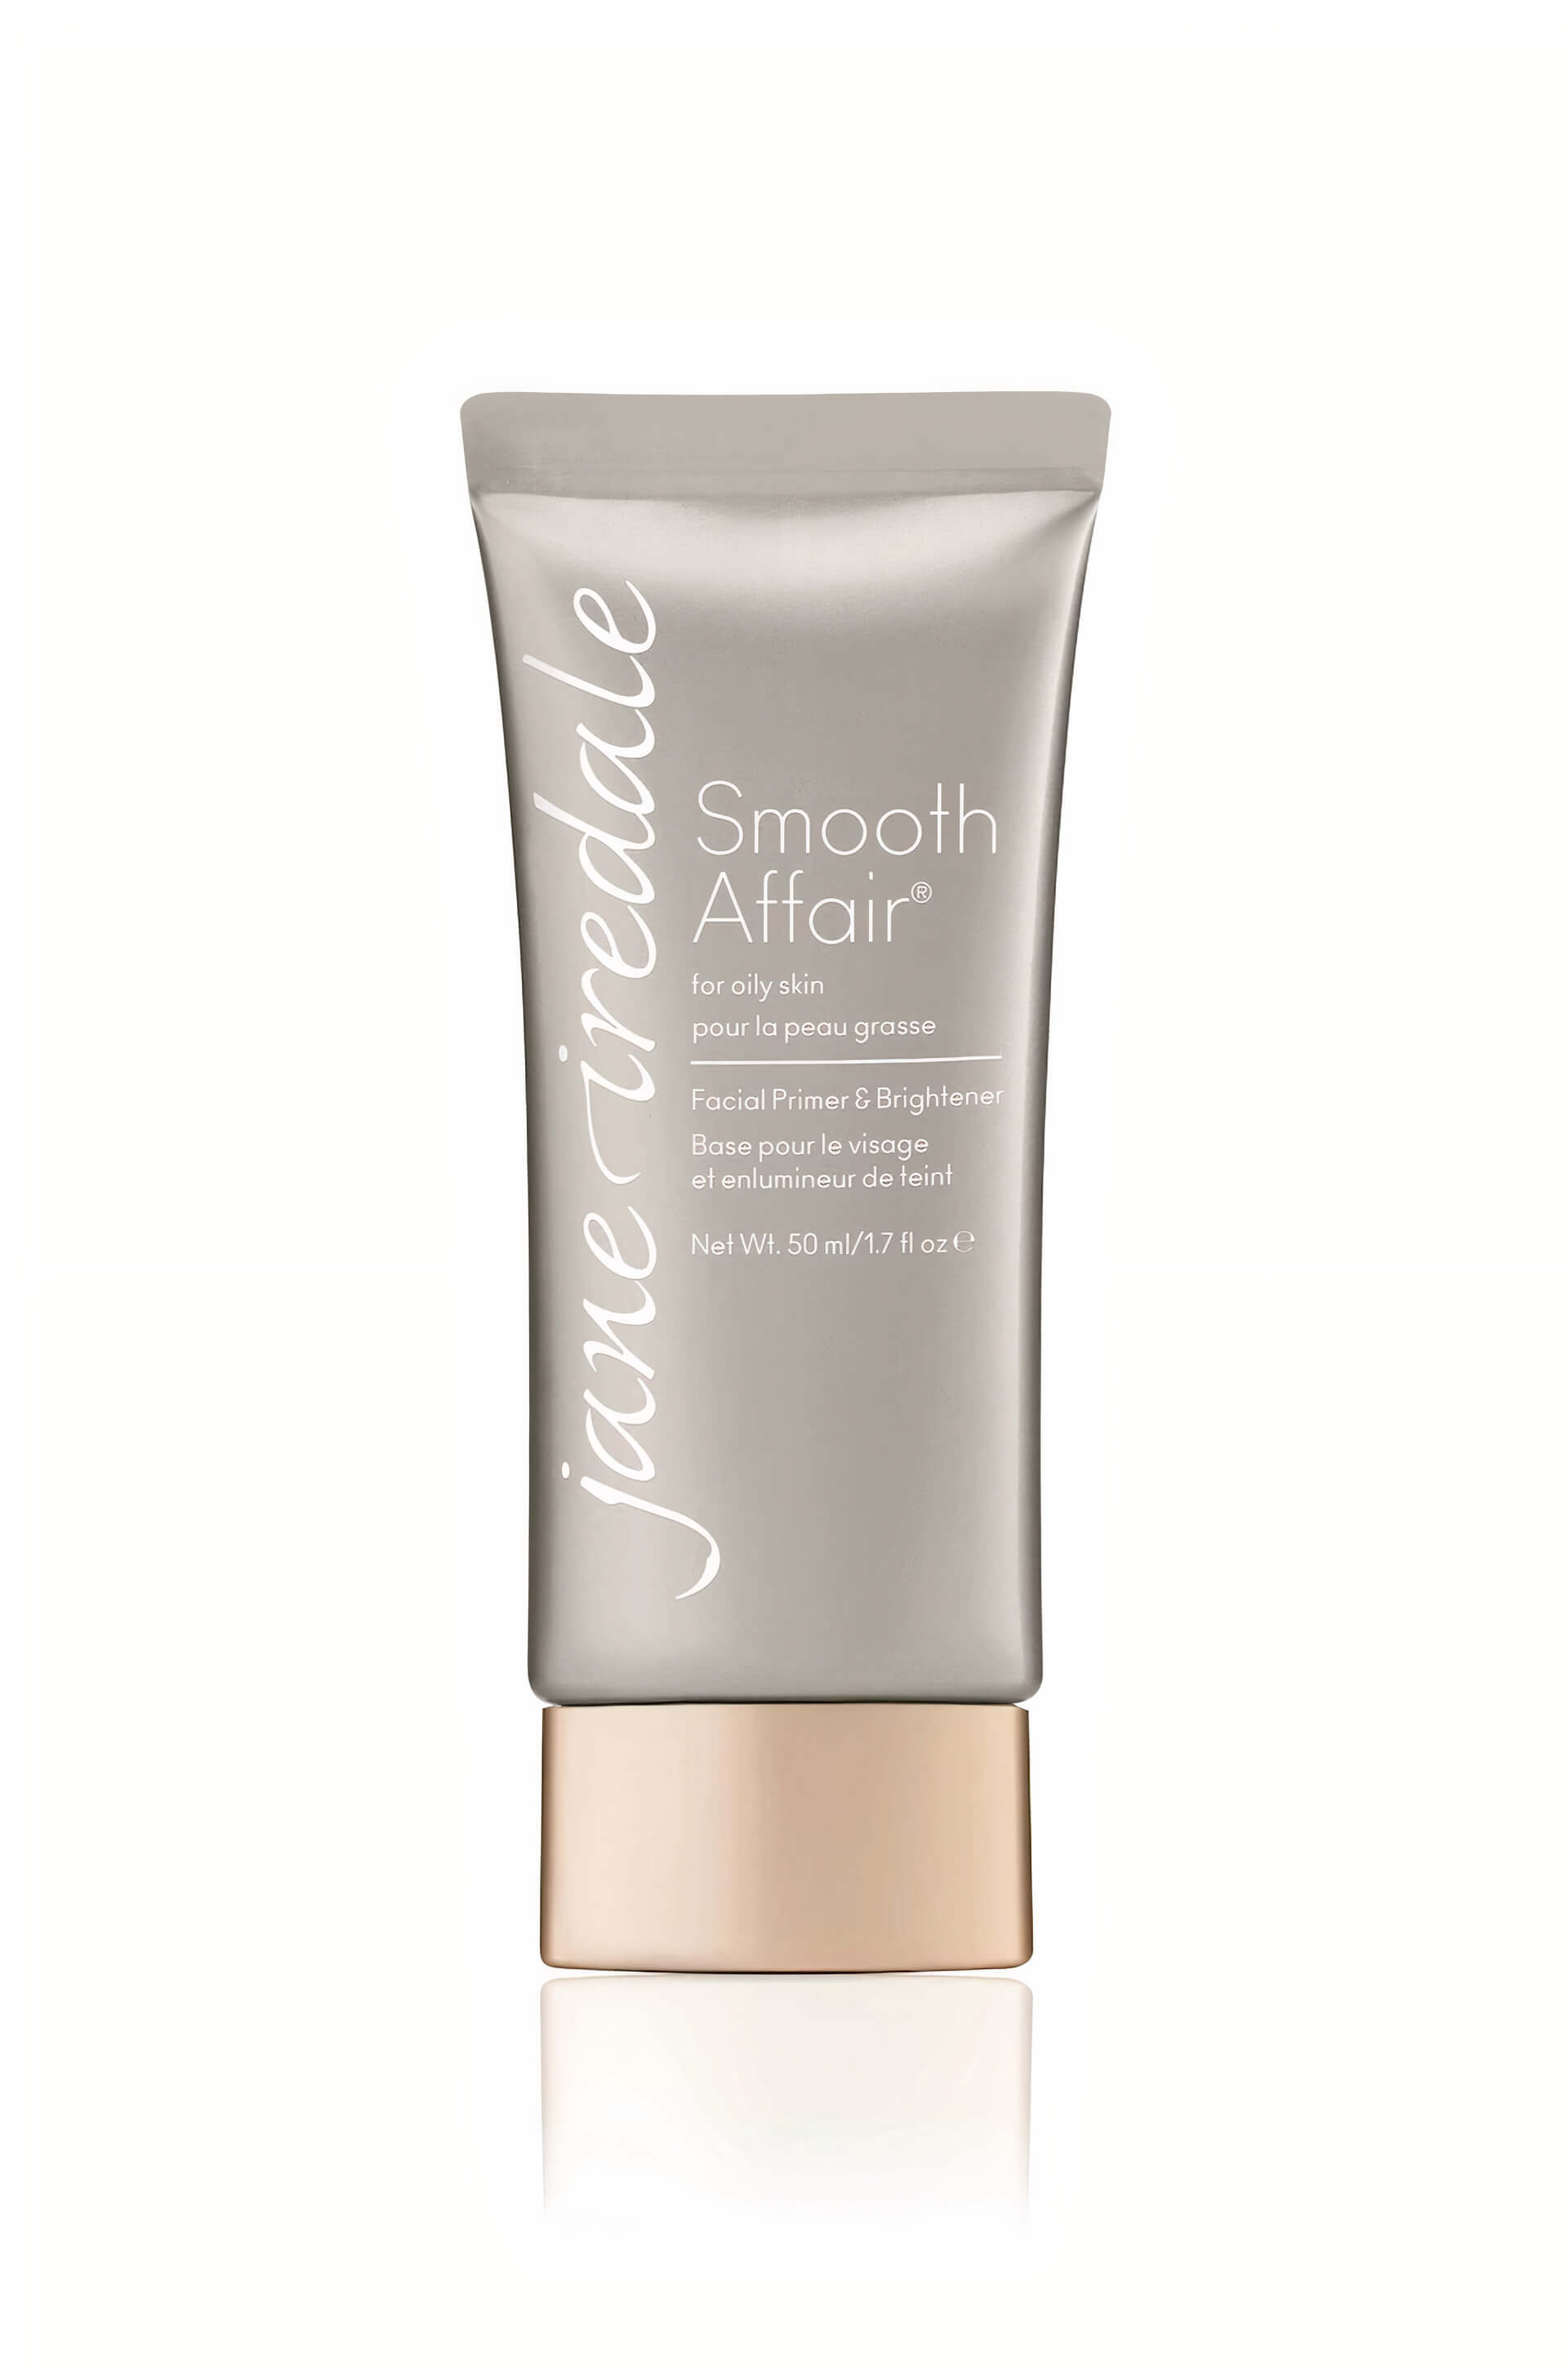 Jane Iredale | Smooth Affair® for Oily Skin Facial Primer & Brightener